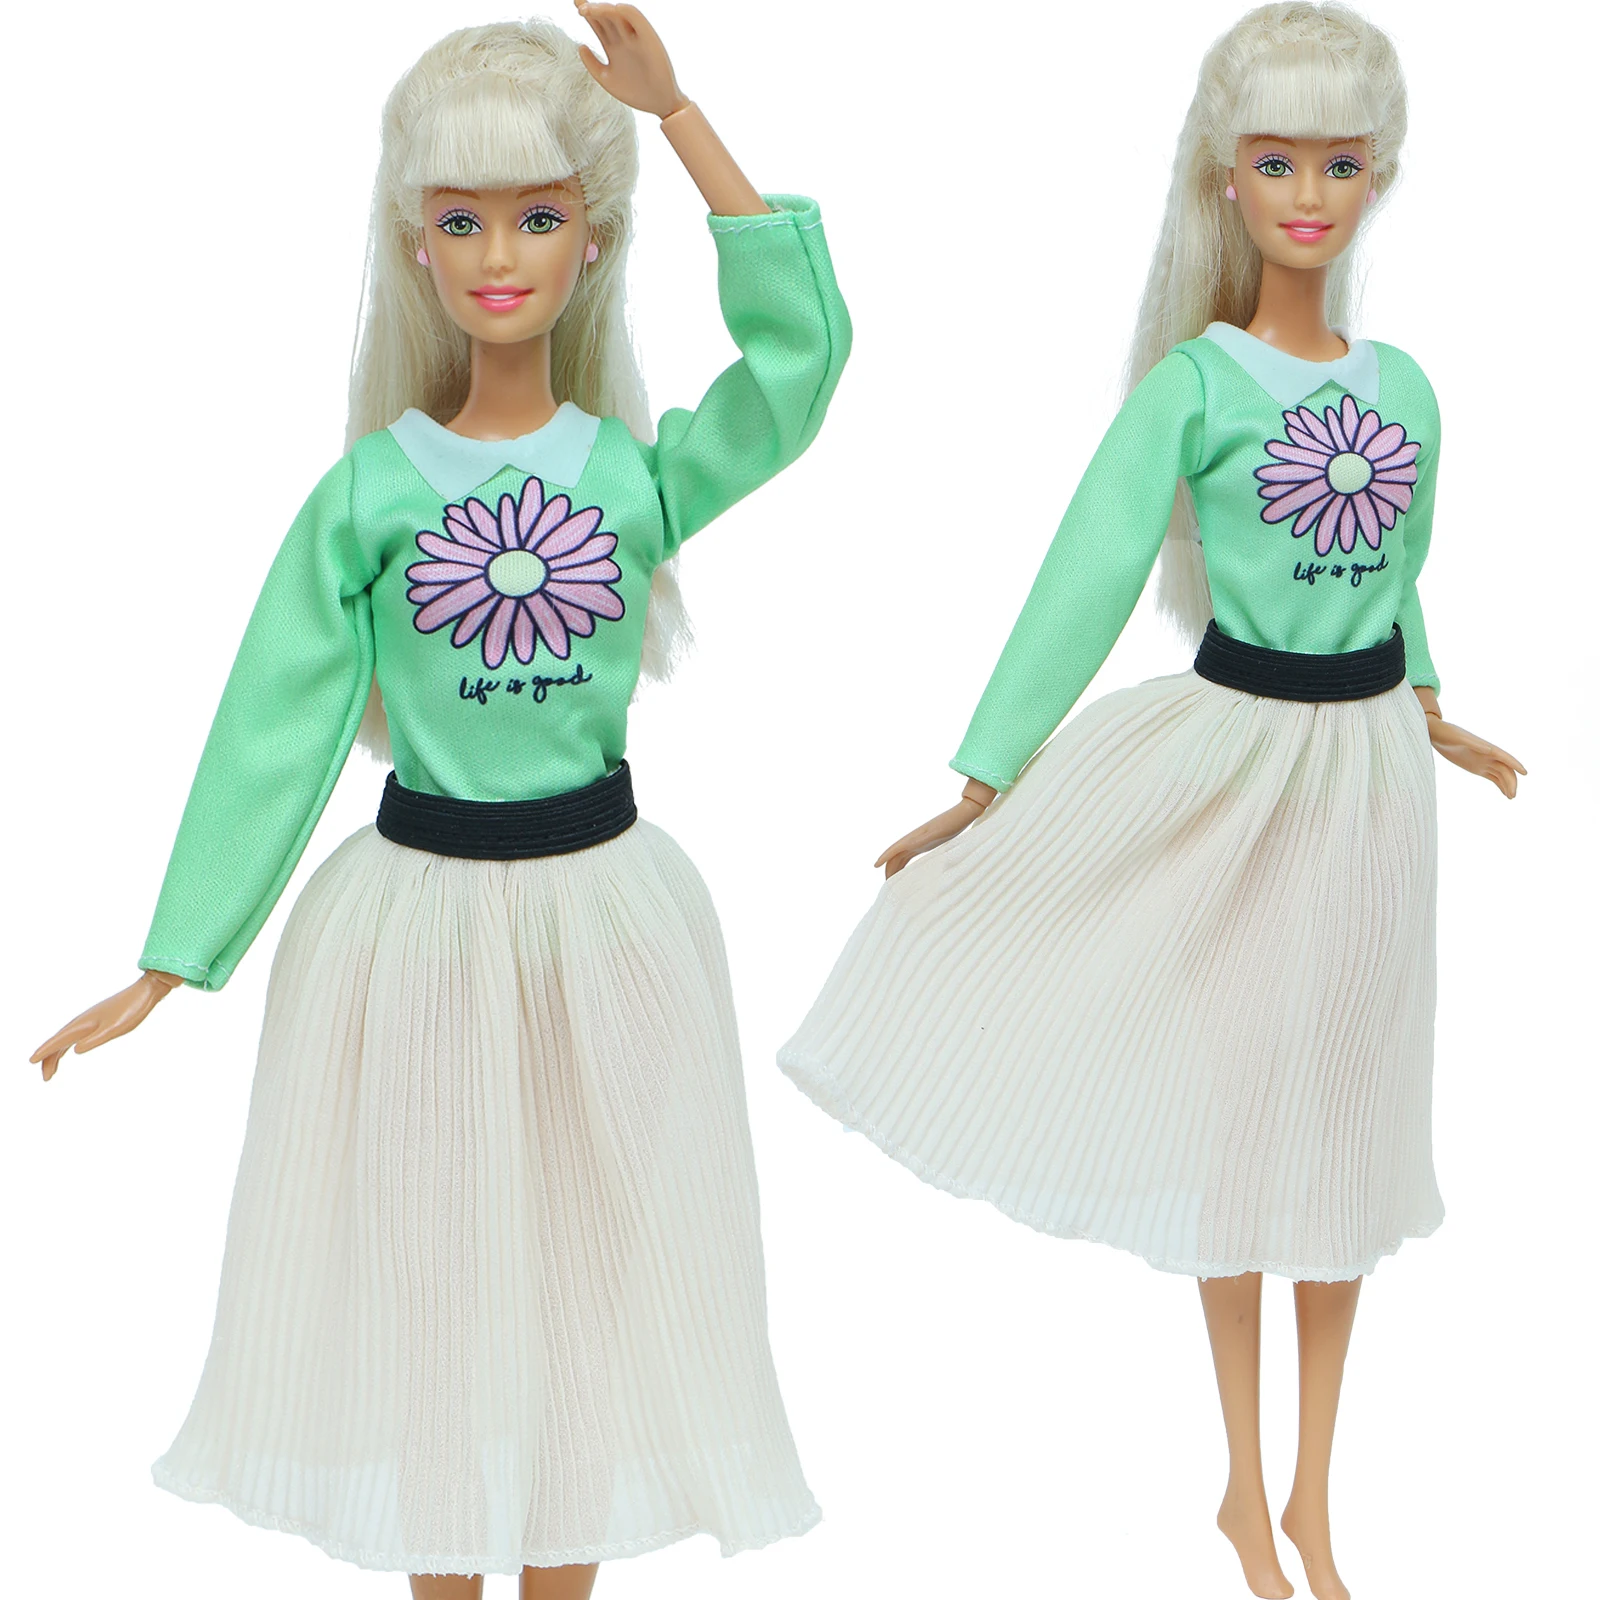 Lot Twelve (12) Skirts Barbie Clothes for 11.5 Doll + Bonus (REF